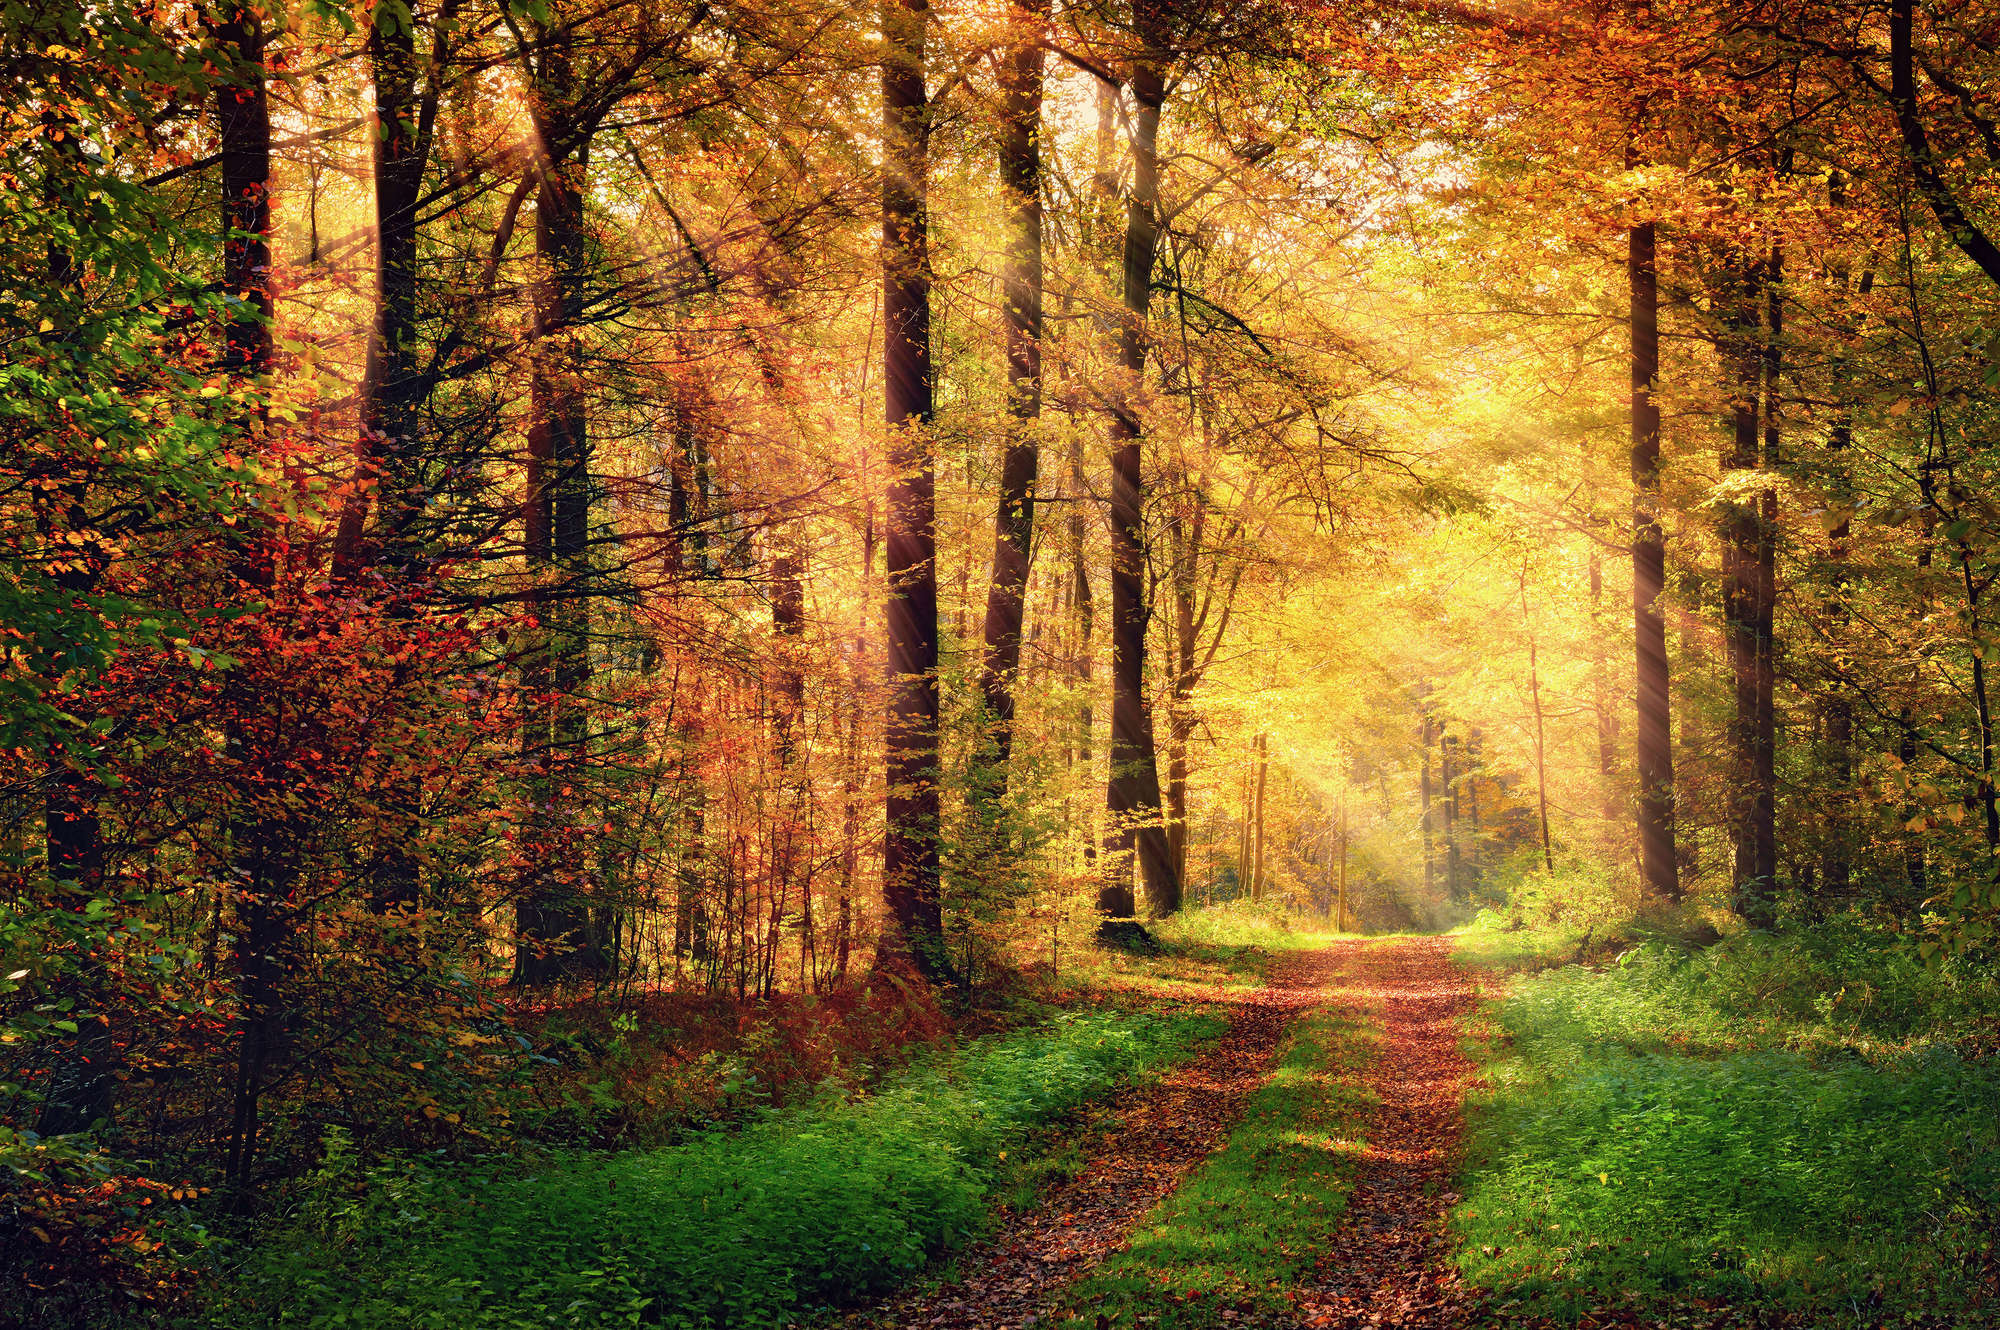             Natur Fototapete Waldweg im Herbst auf Matt Glattvlies
        